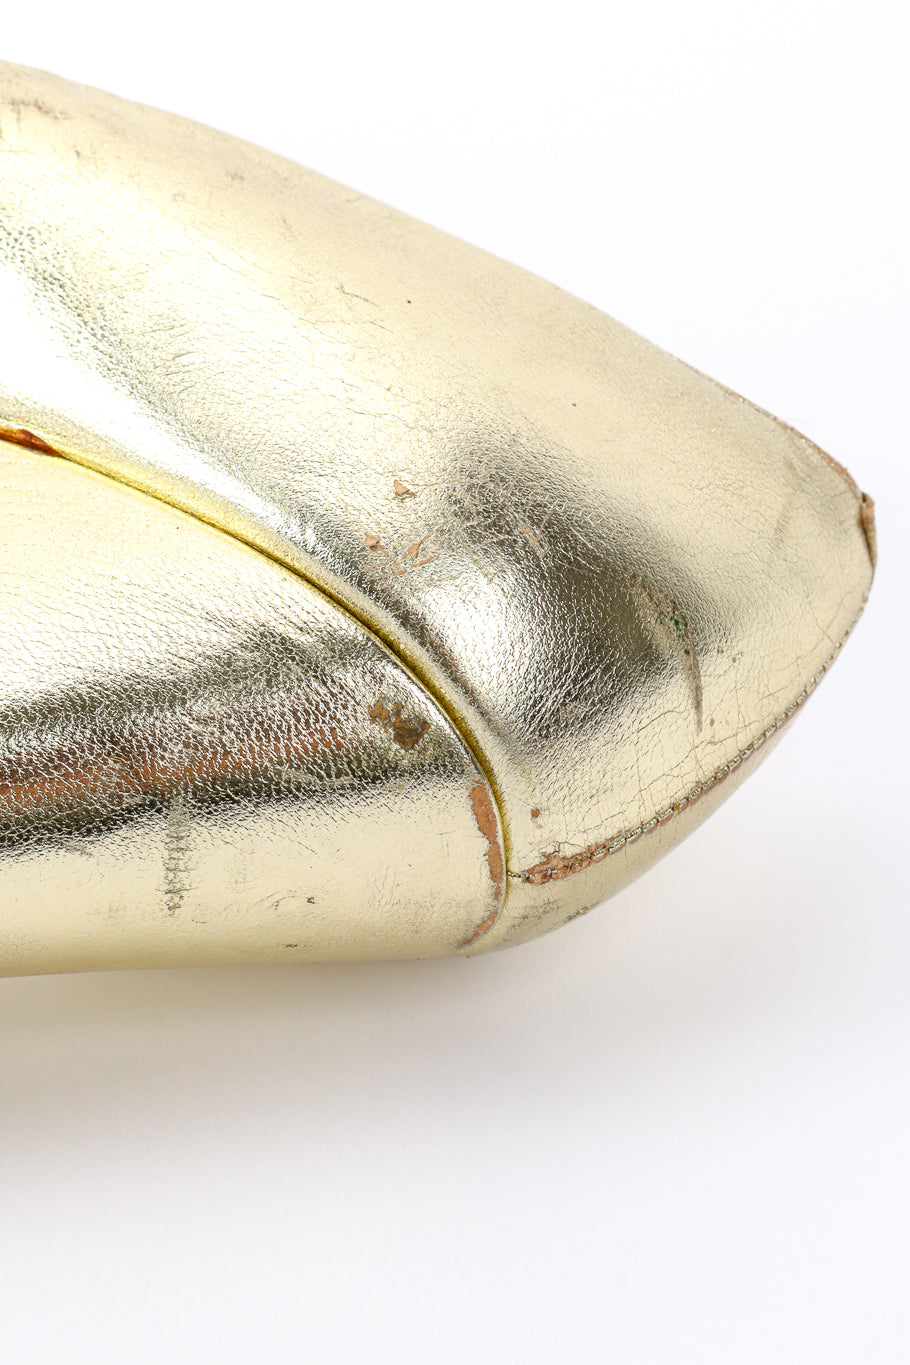 Vintage Vivienne Westwood 1993 F/W Metallic Gold Elevated Court Shoe right shoe back counter closeup @recessla